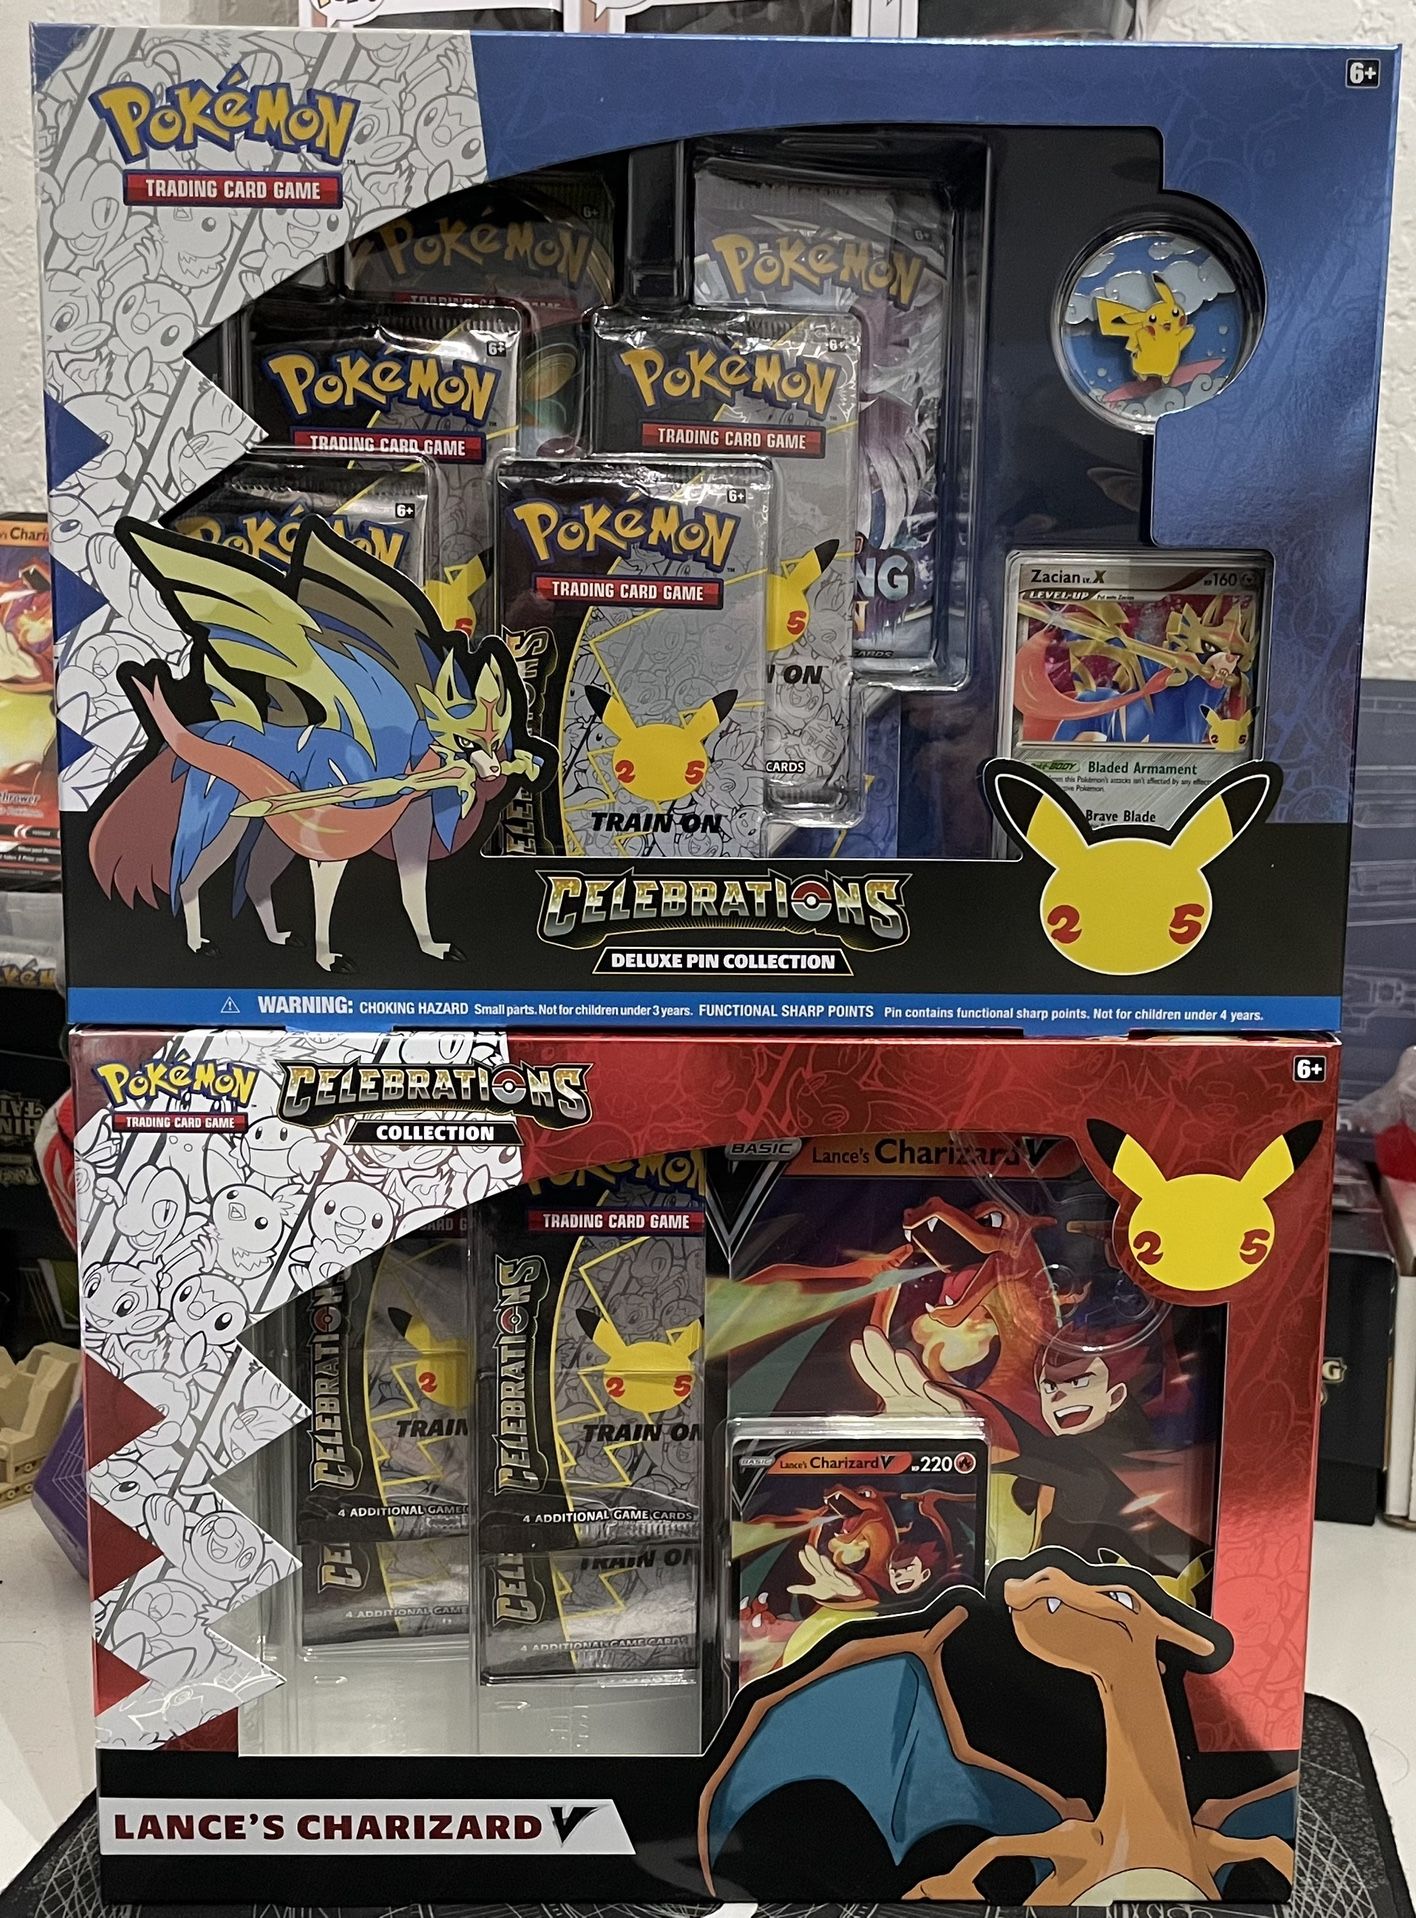 2 Lot- Pokemone Celebrations Lances Charizard And Deluxe Pin Box